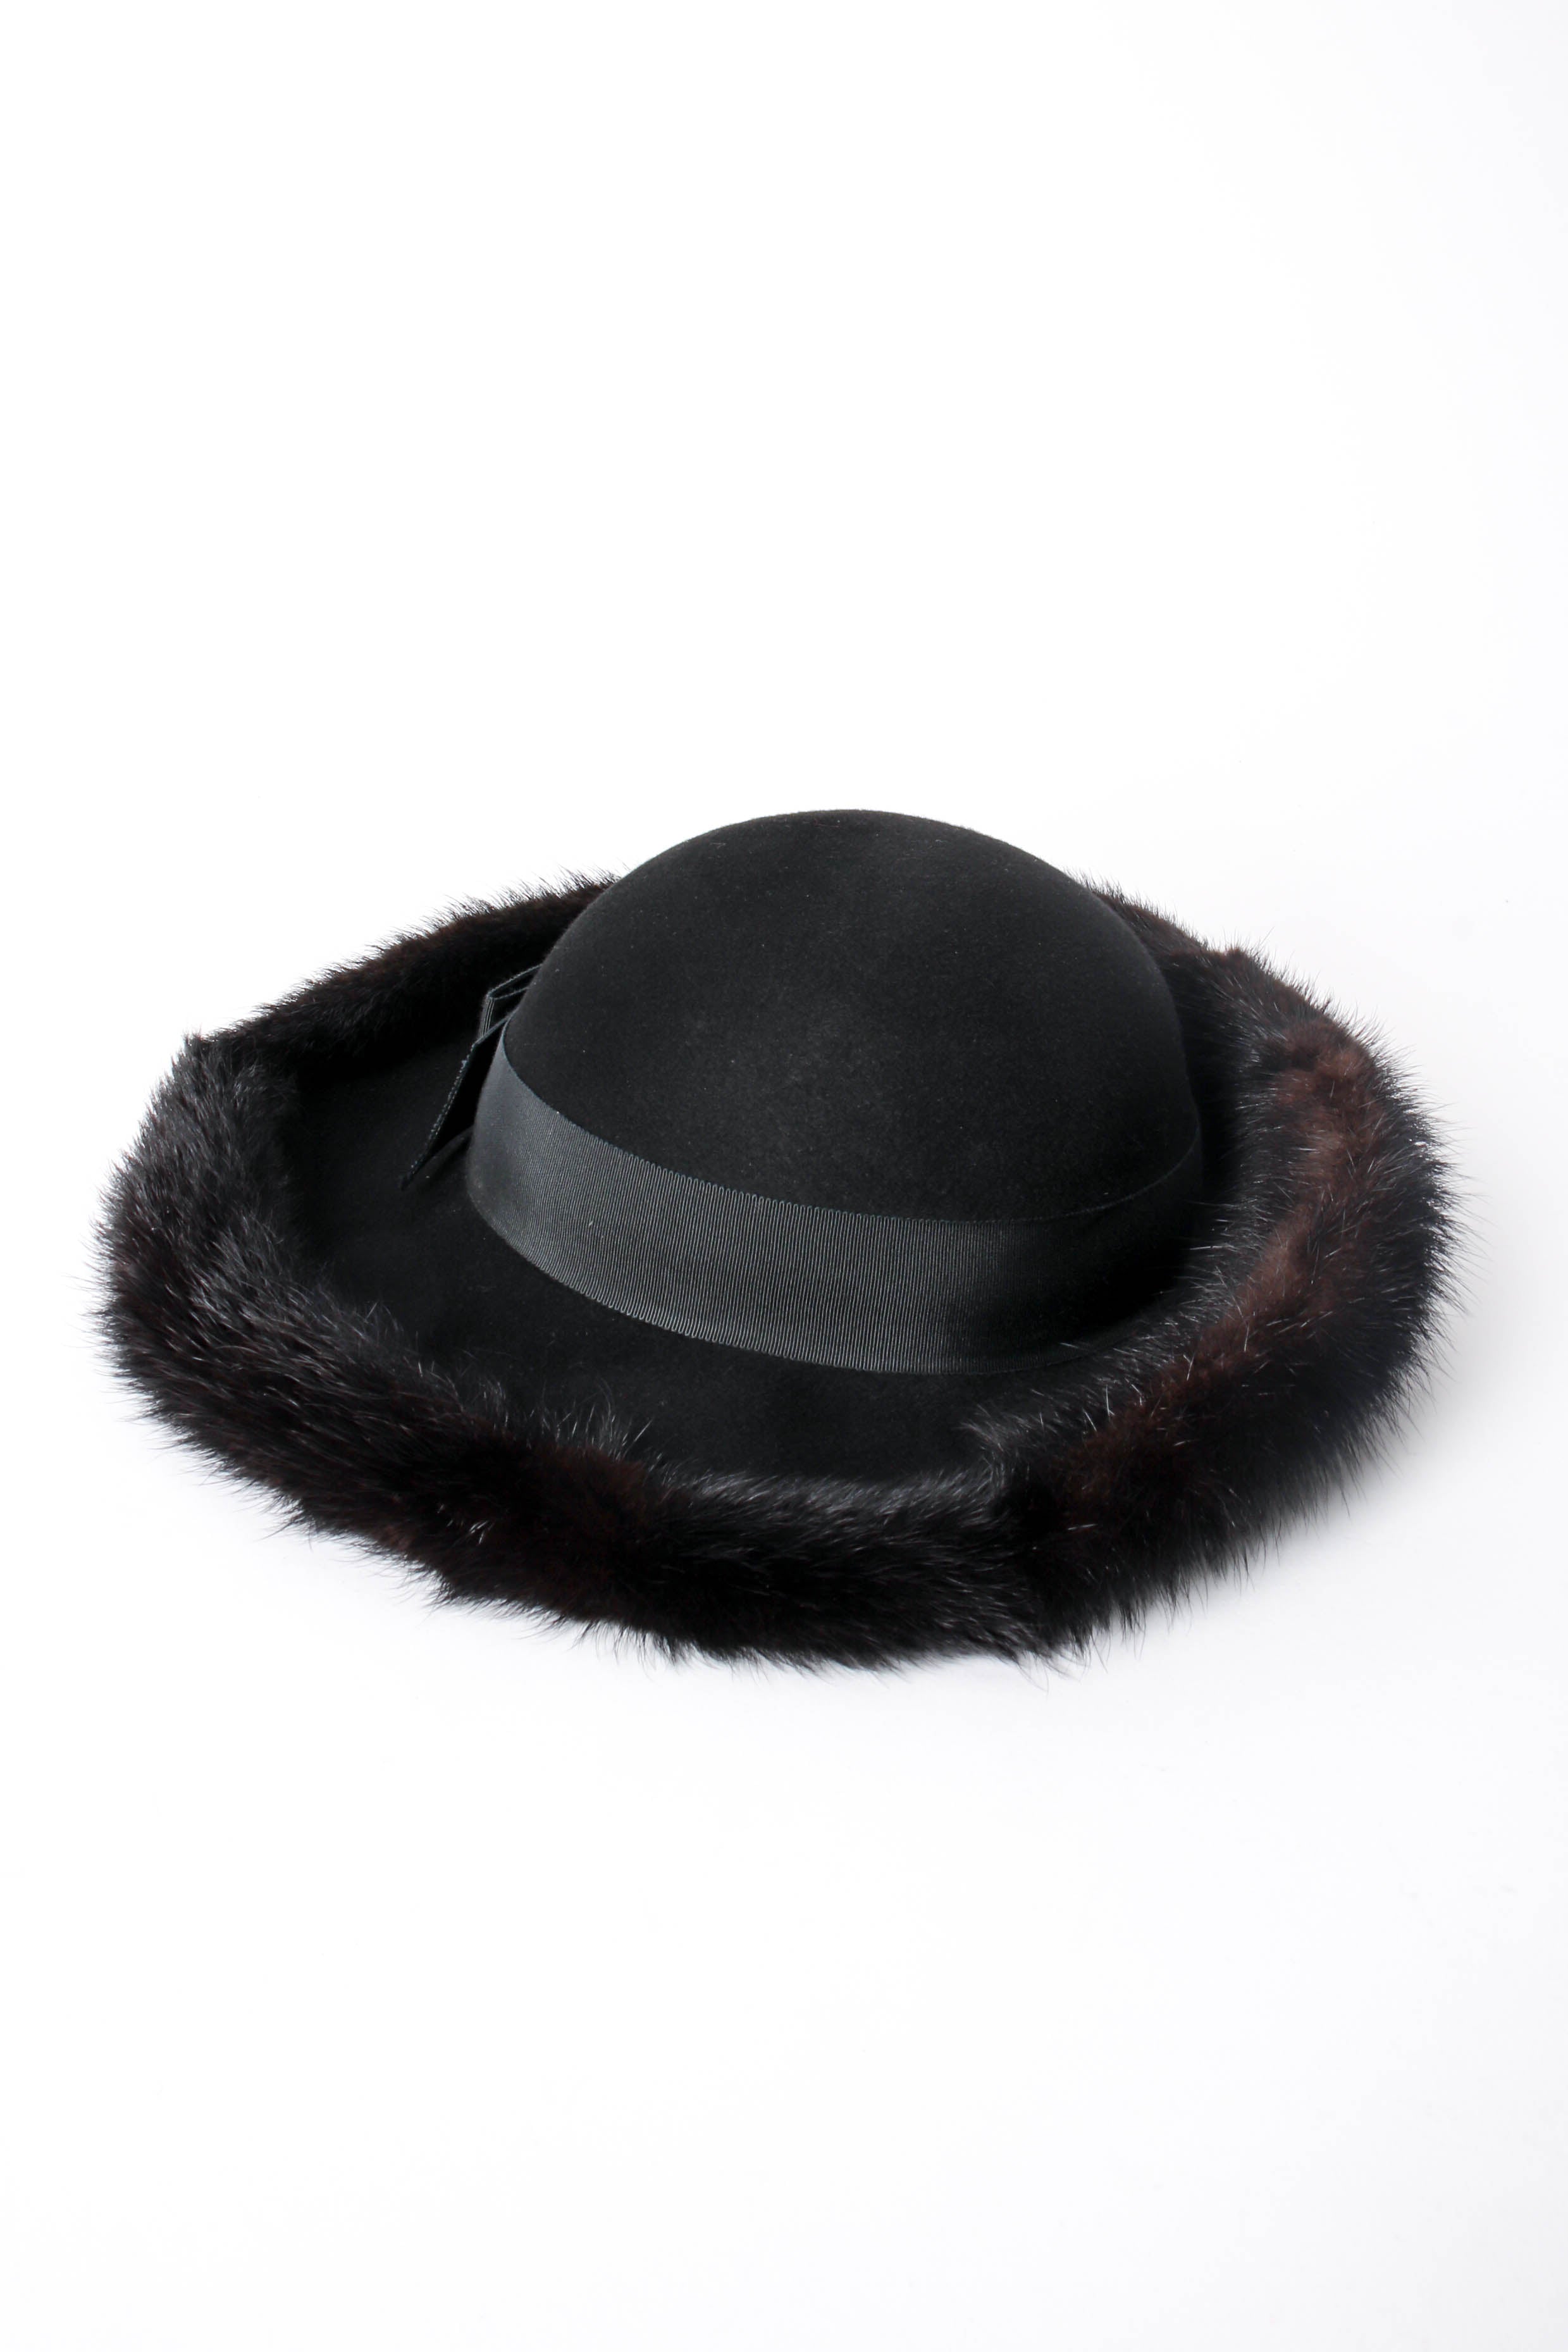 Vintage Mr. John Excello Fur-Trimmed Petite Halo Hat side at Recess Los Angeles